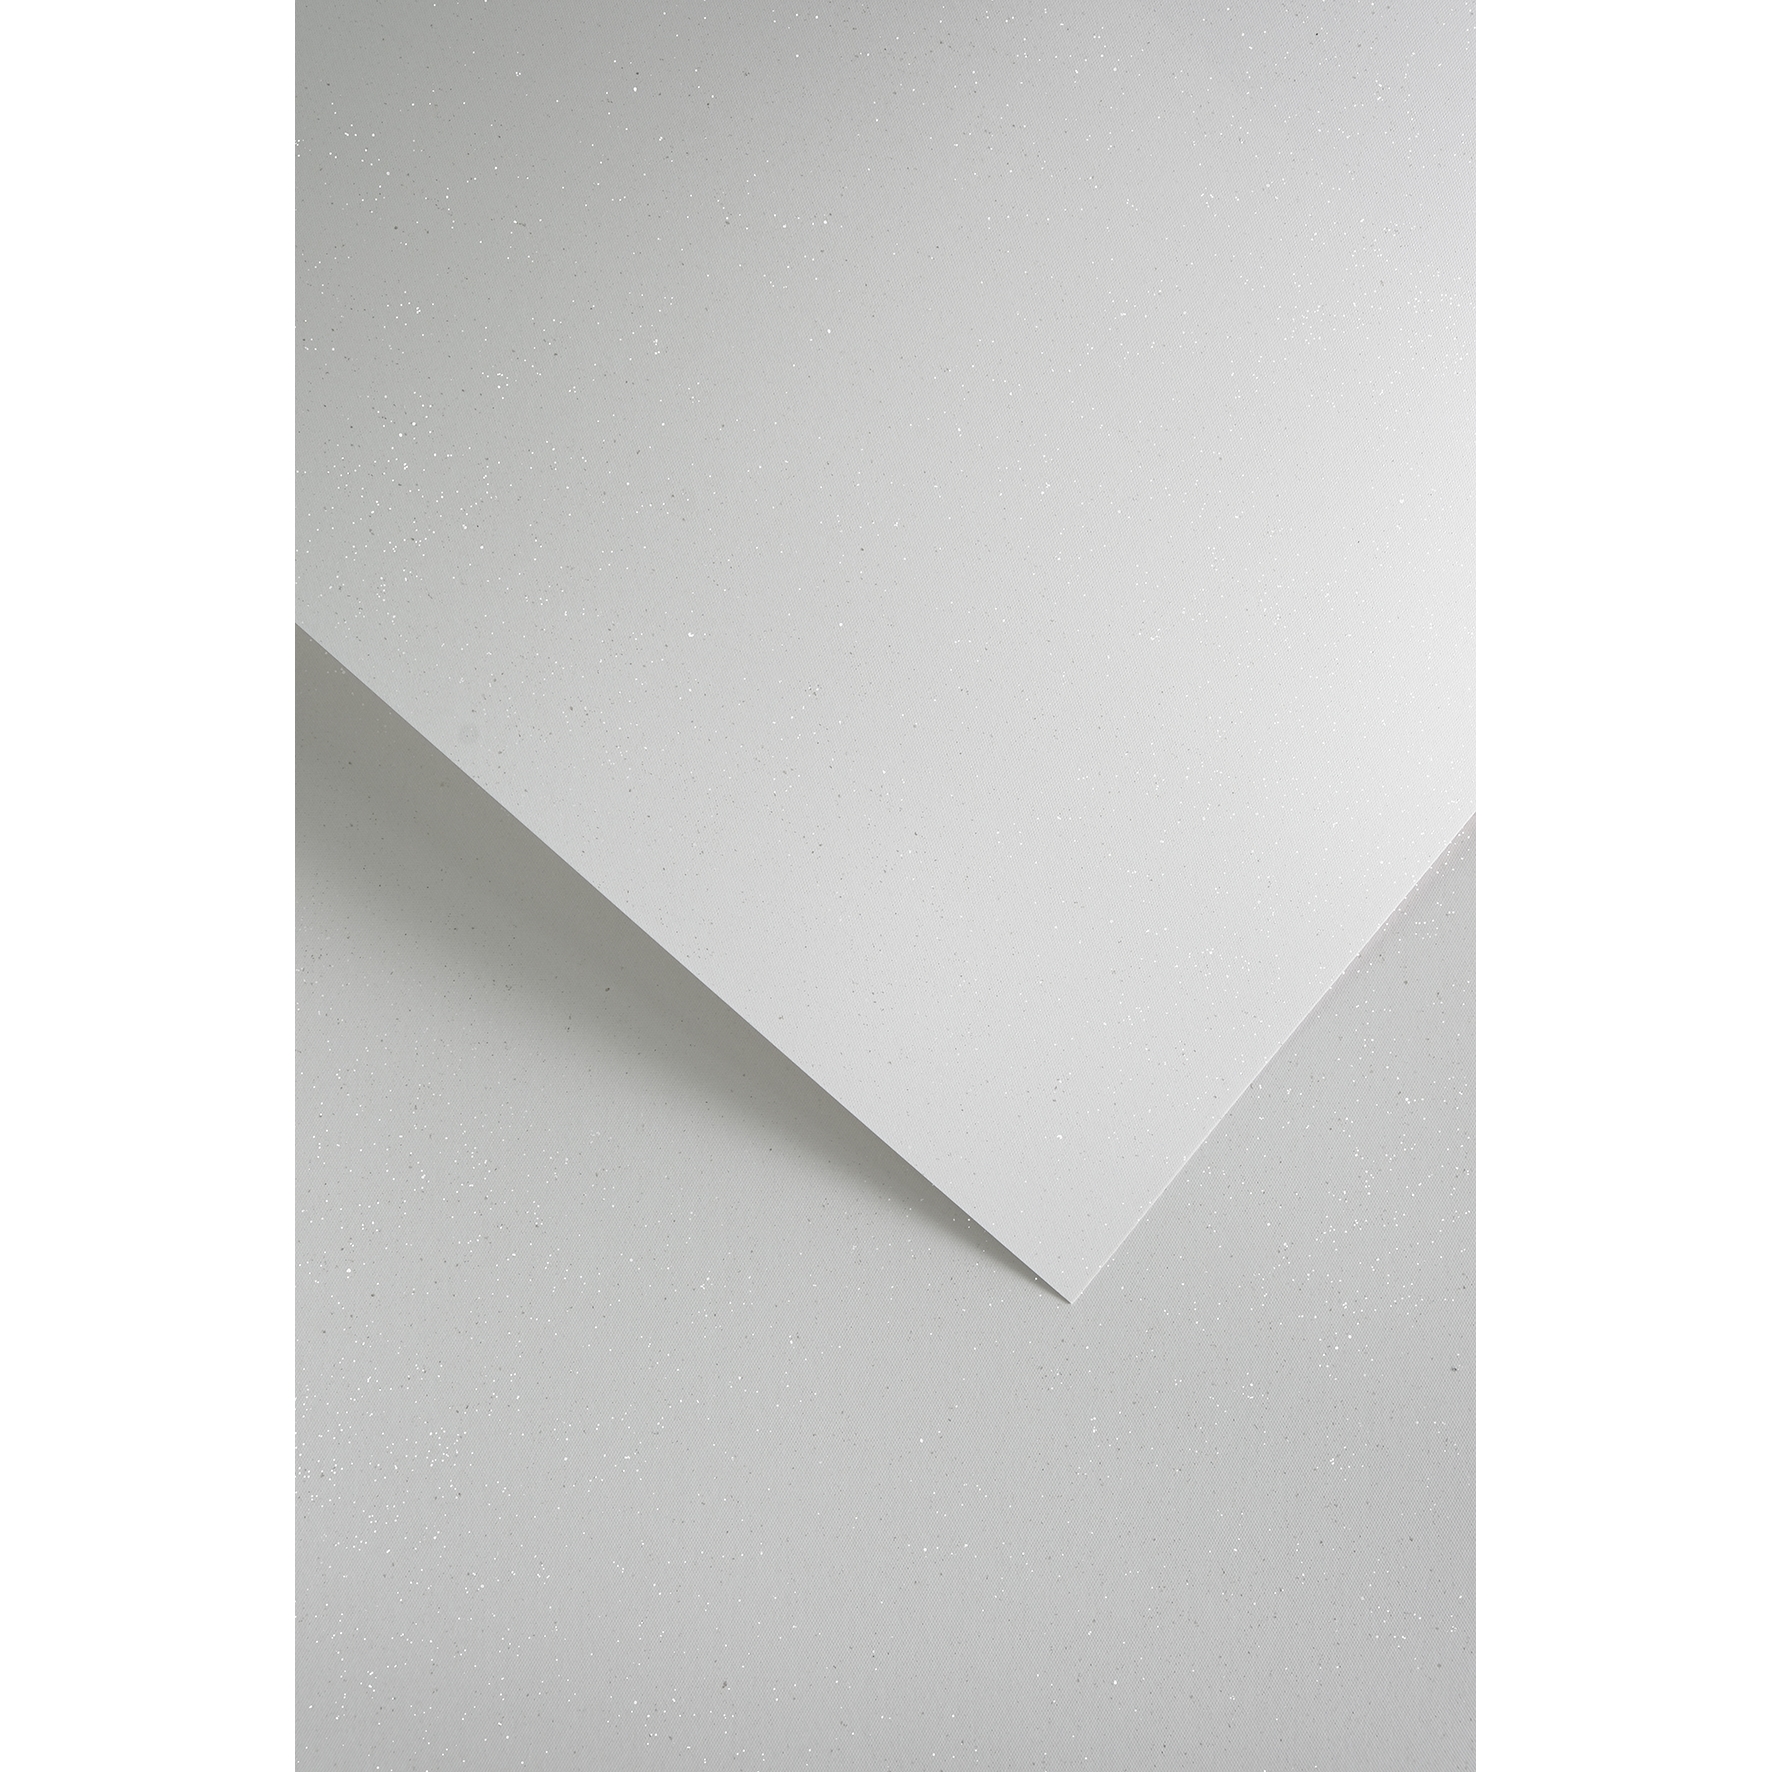 Ozdobný papír Millenium, bílý, 220g, 20ks